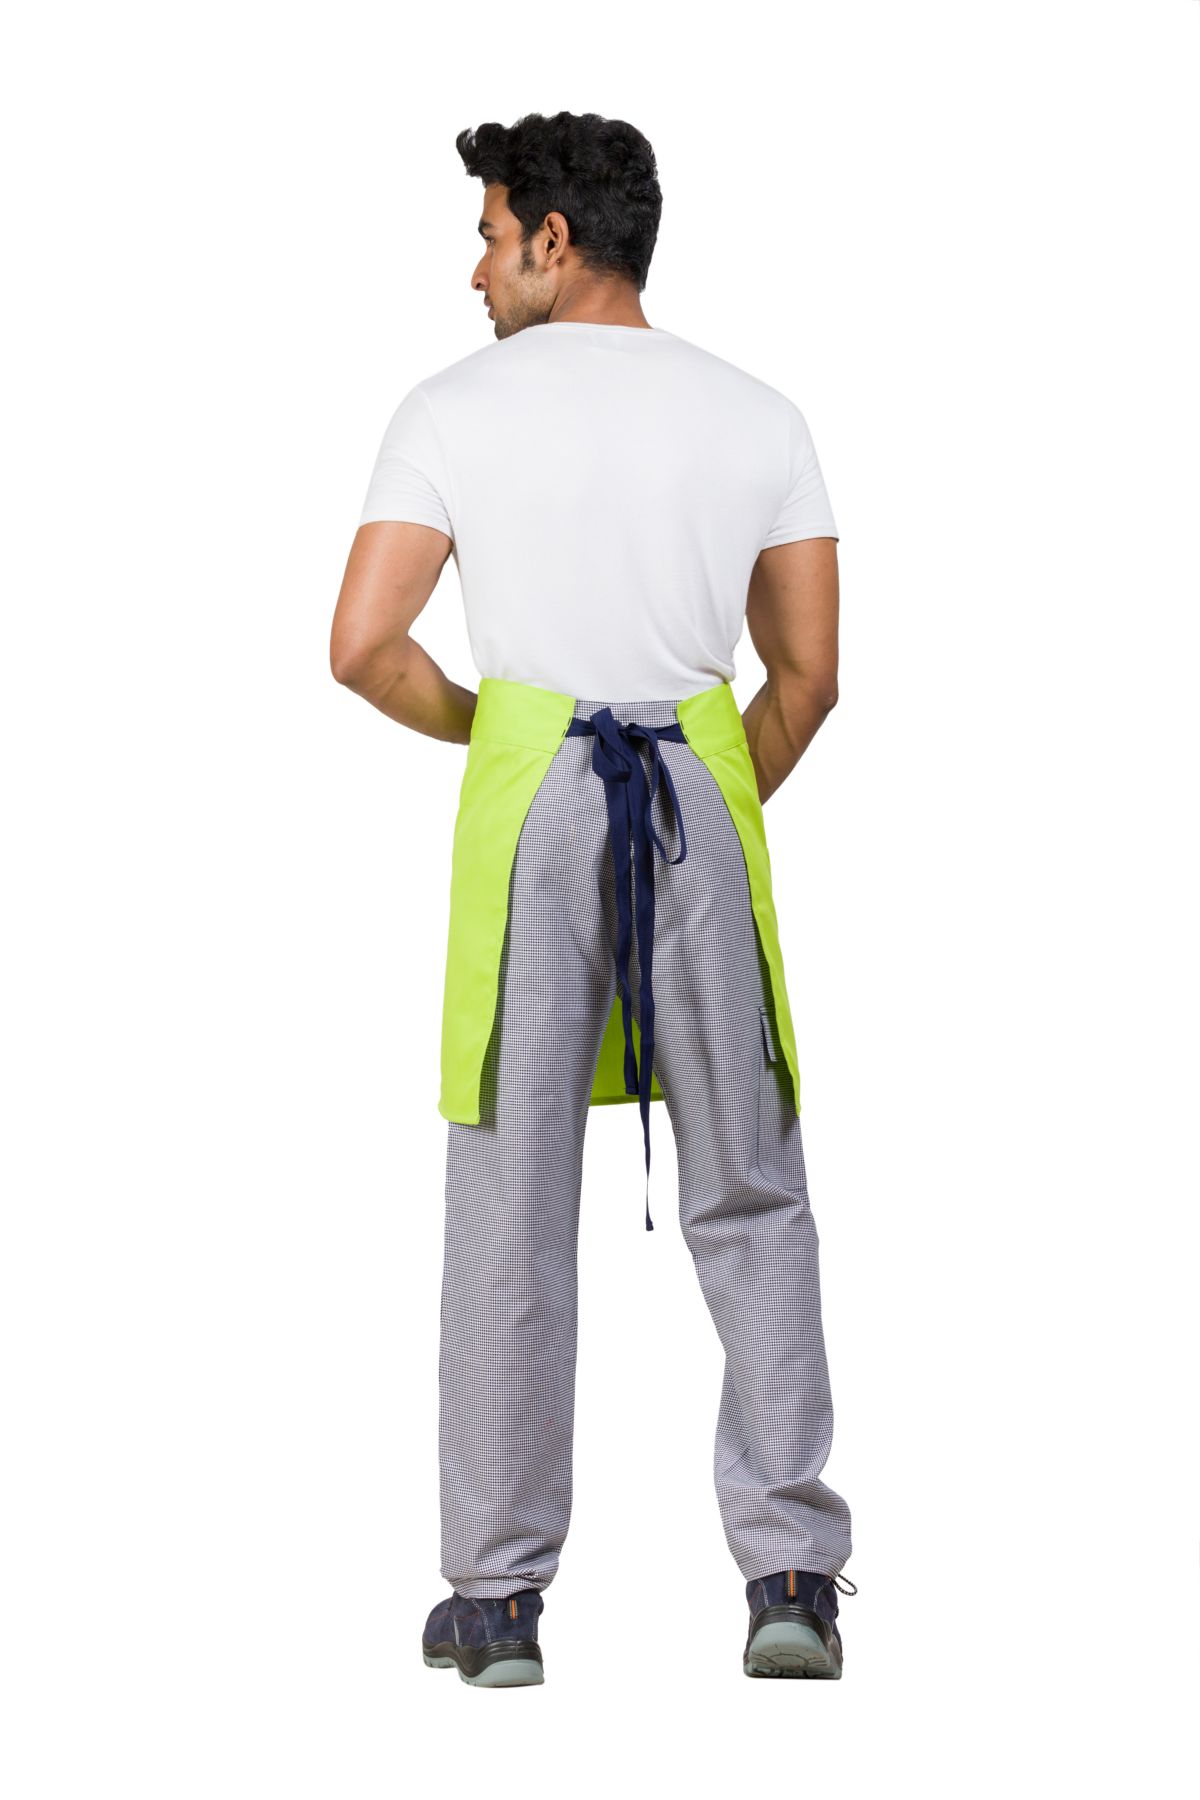 Cotton Blend Easy Fit Adjustable Ergonomic Front Pocket Lime Green Waist Apron